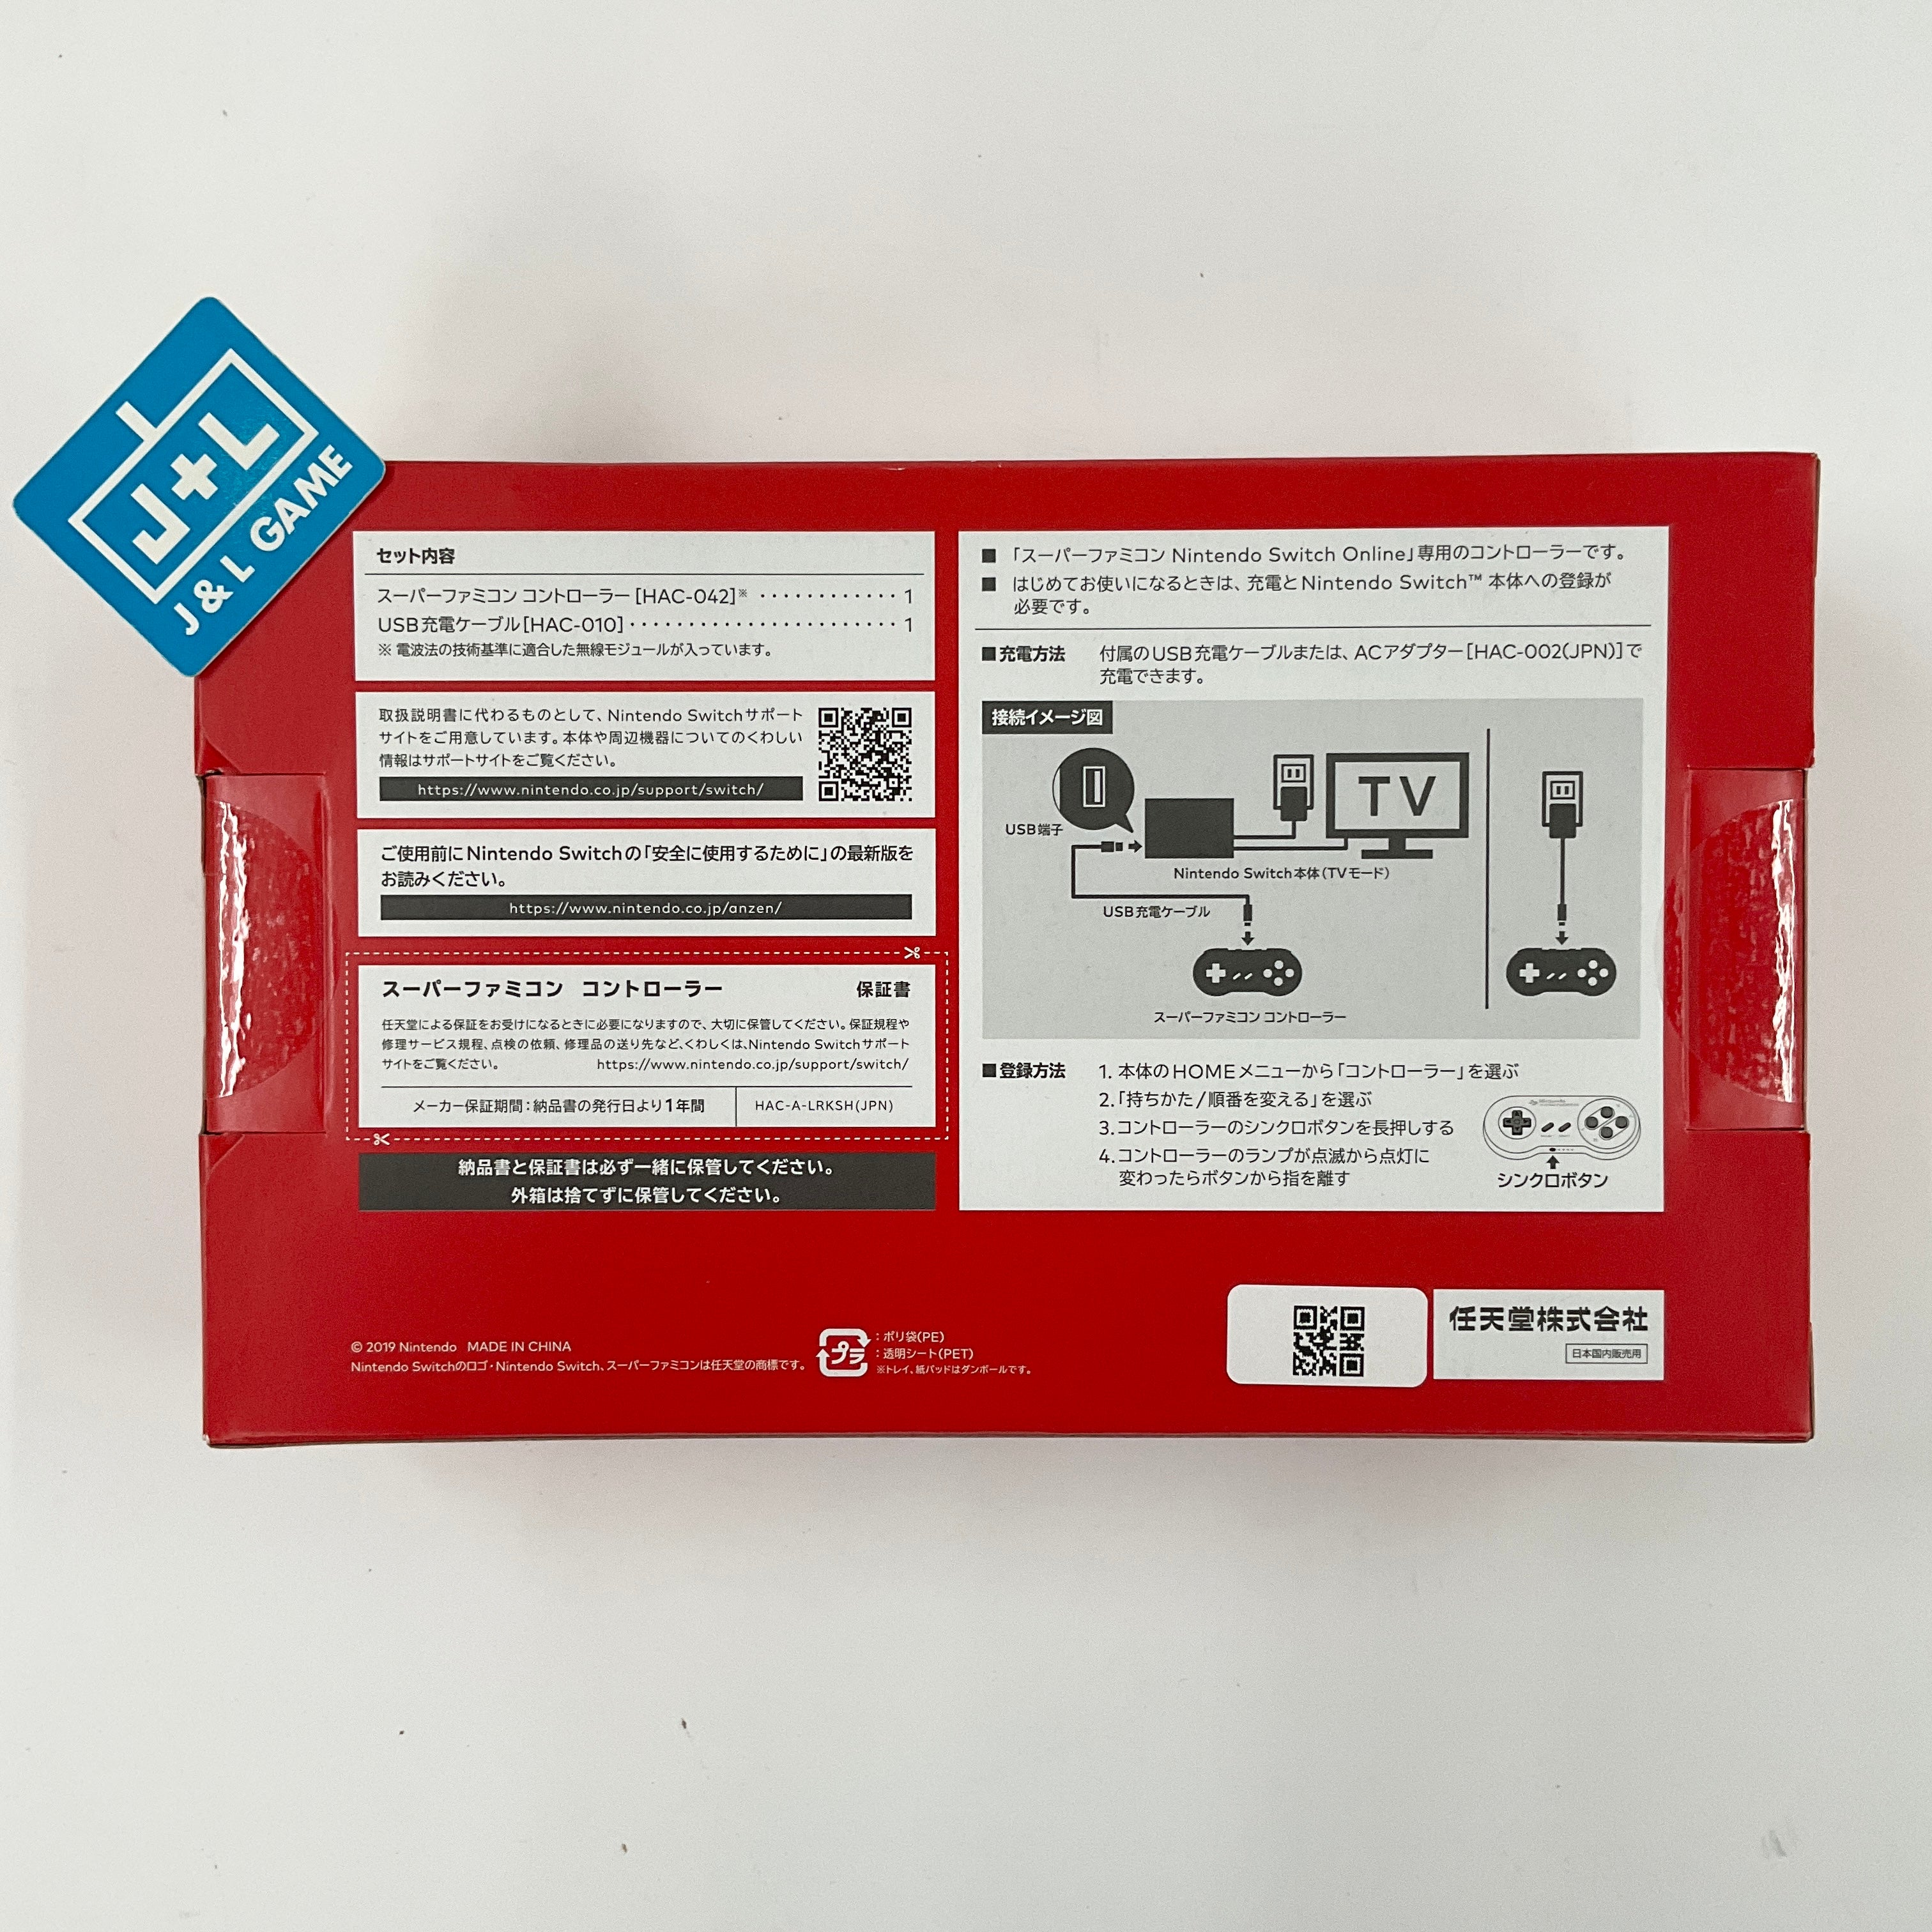 Nintendo Switch Online Super Famicom Controller - (NSW) Nintendo Switch (Japanese Import) Accessories Nintendo   